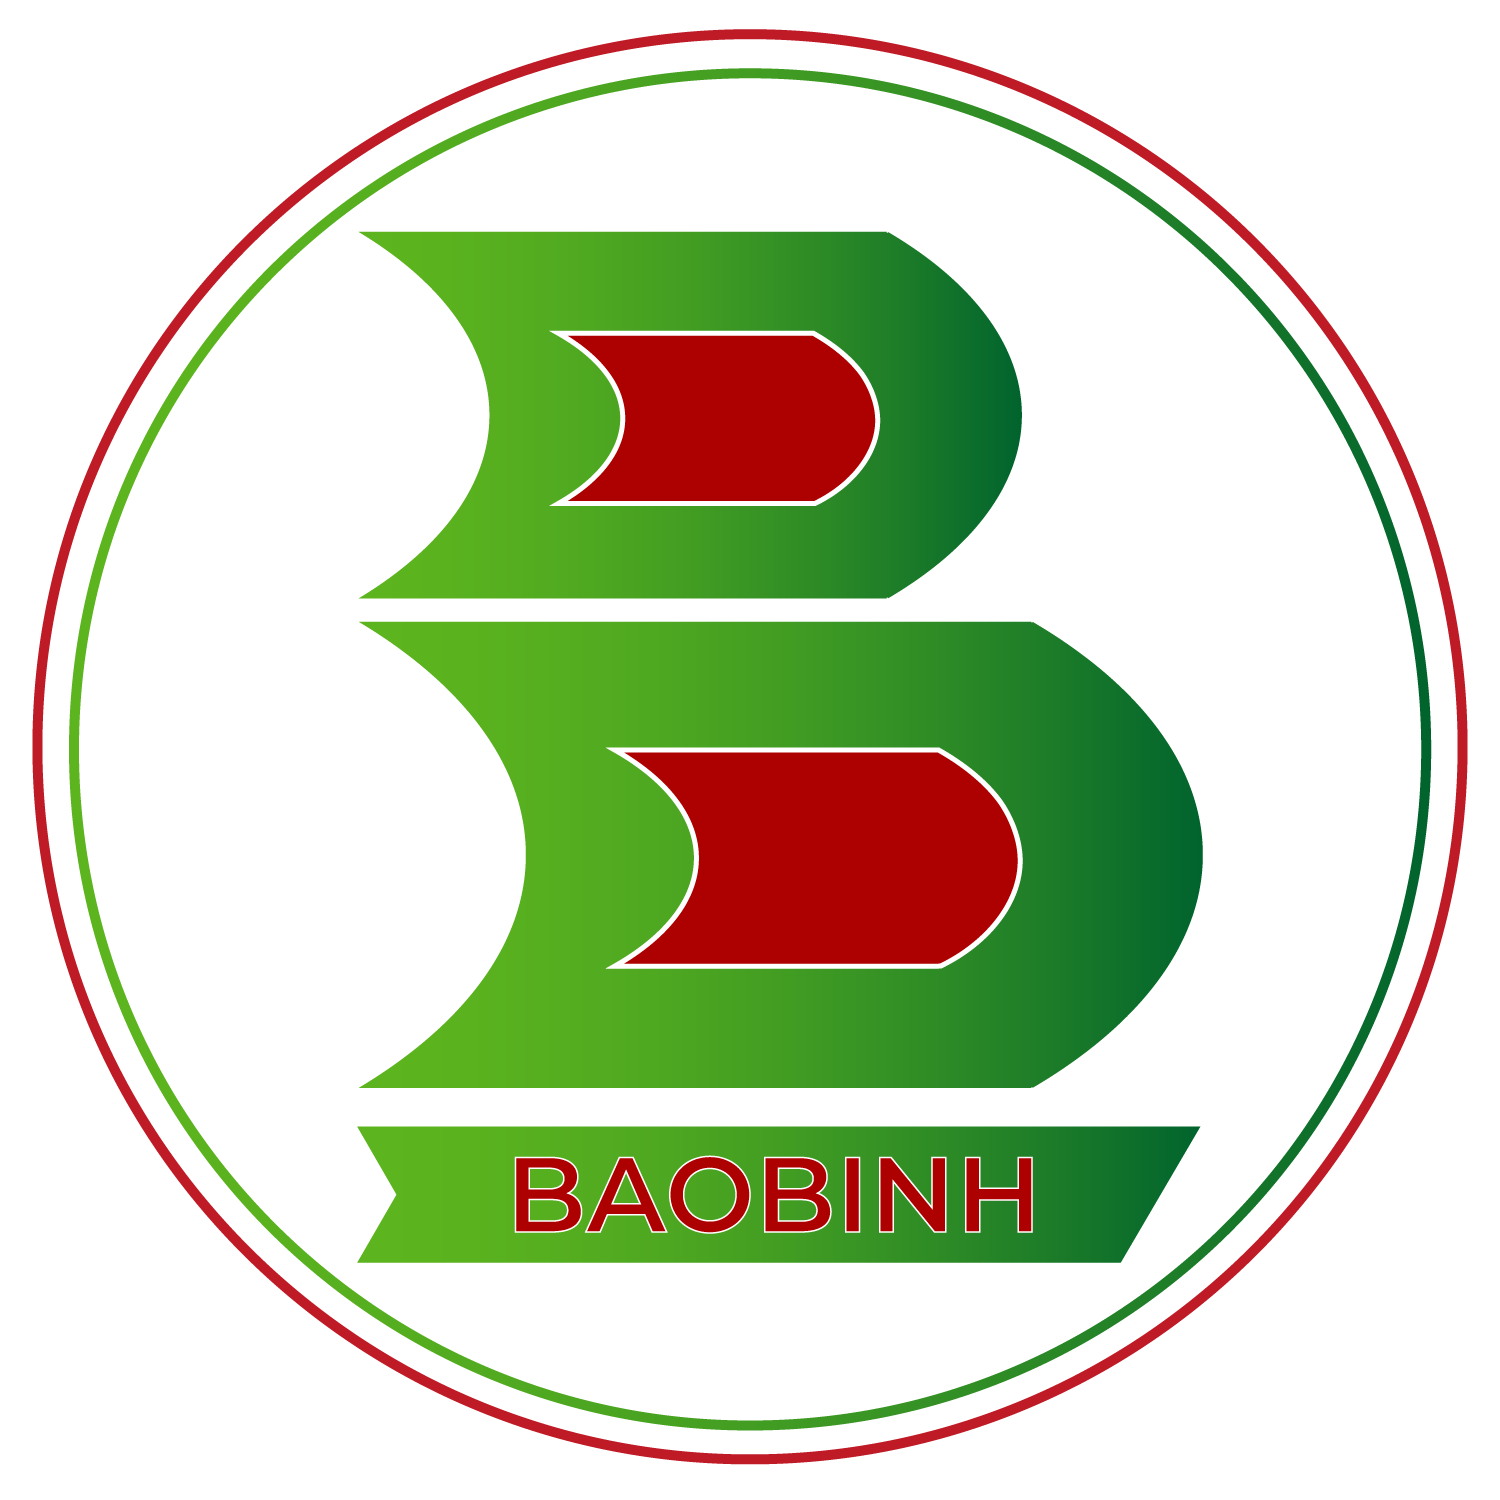 Bao Binh Composite | BBplanters Composite